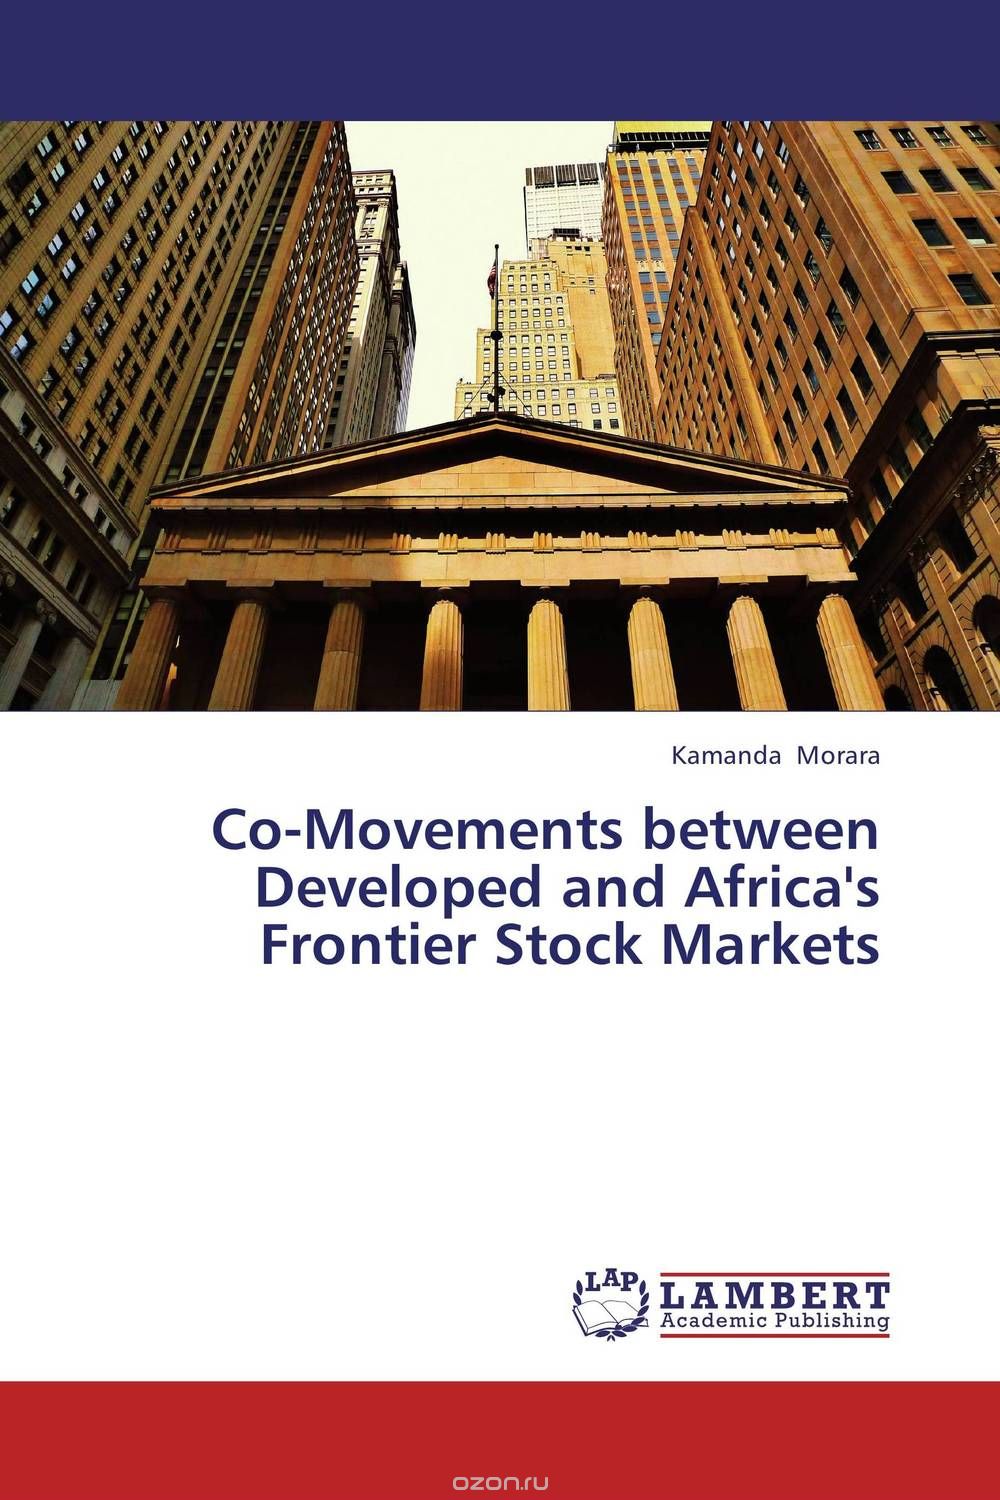 Скачать книгу "Co-Movements between Developed and Africa's Frontier Stock Markets"